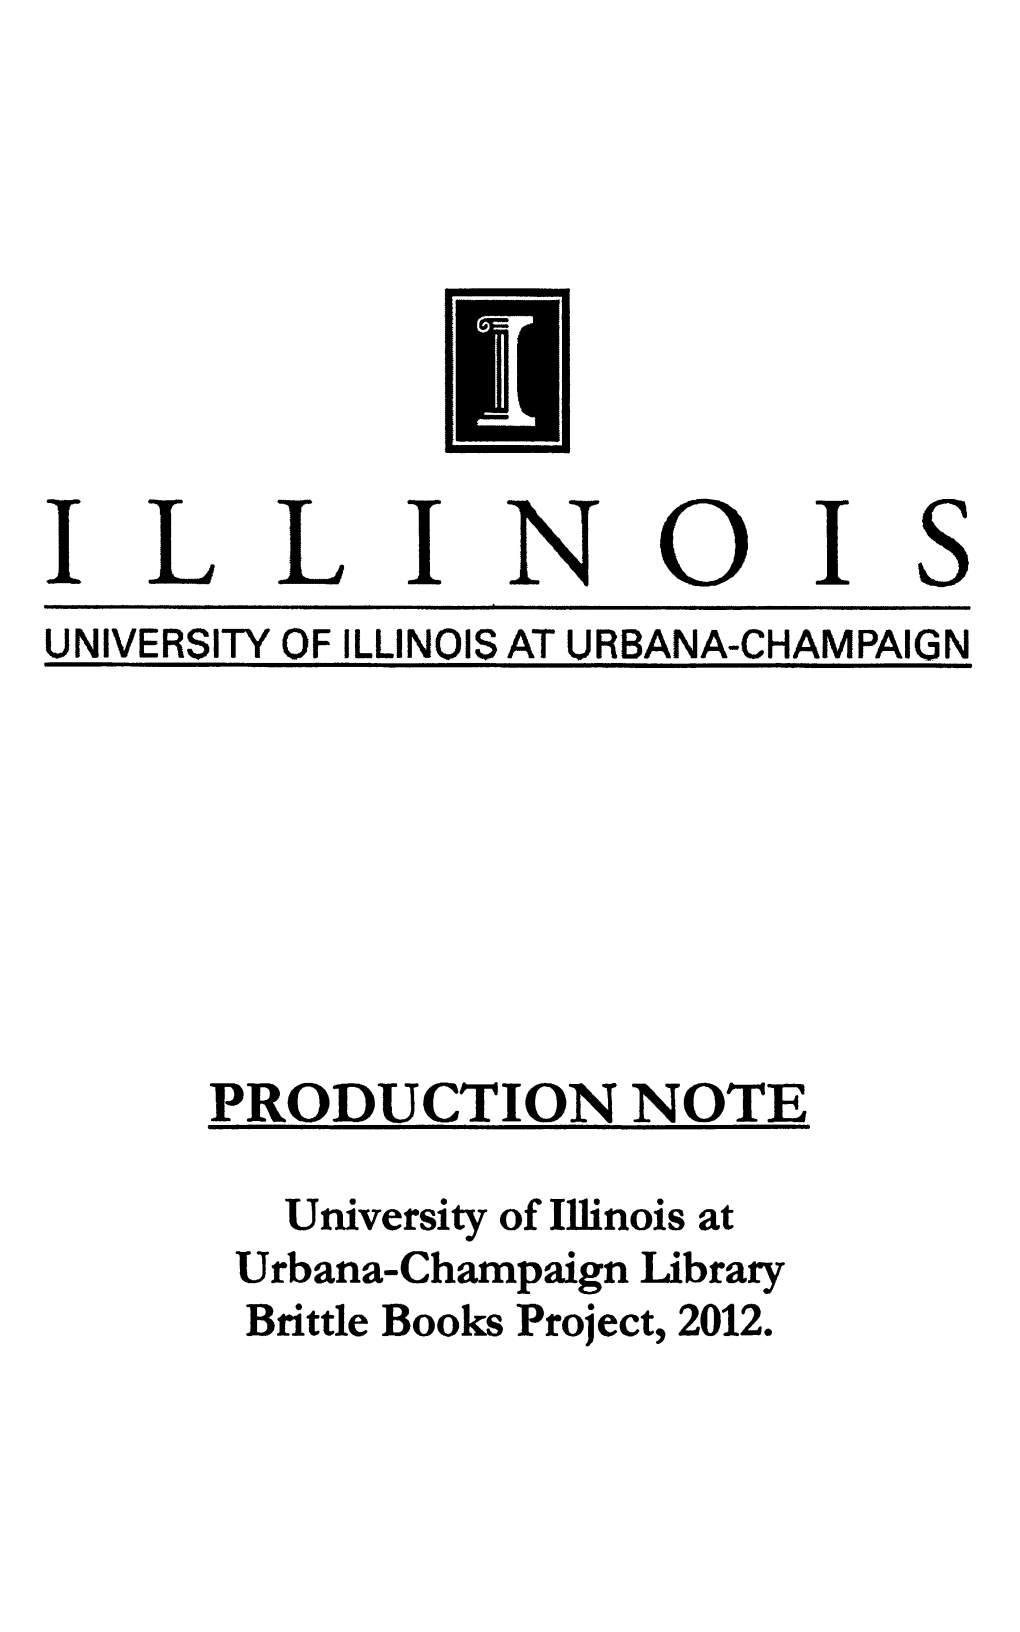 Il Lino I S University of Illinois at Urbana-Champaign